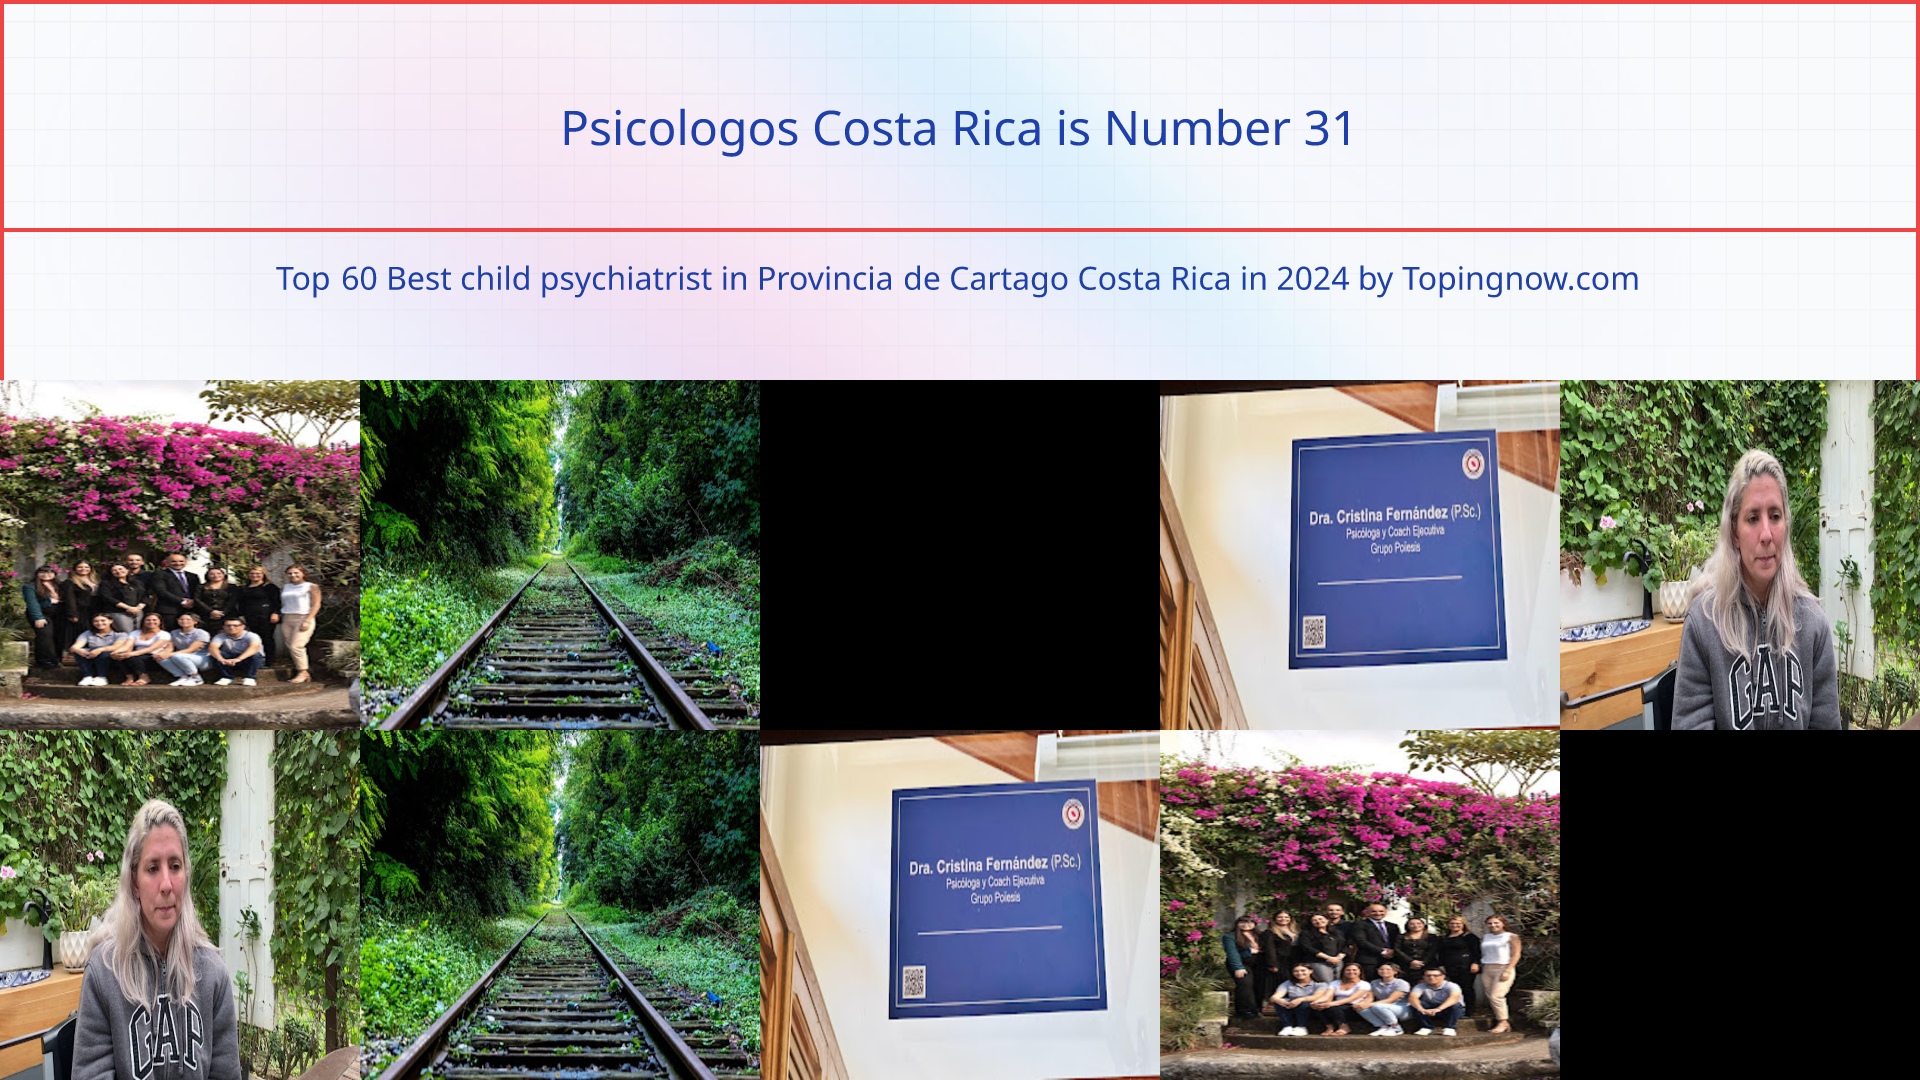 Psicologos Costa Rica: Top 60 Best child psychiatrist in Provincia de Cartago Costa Rica in 2024